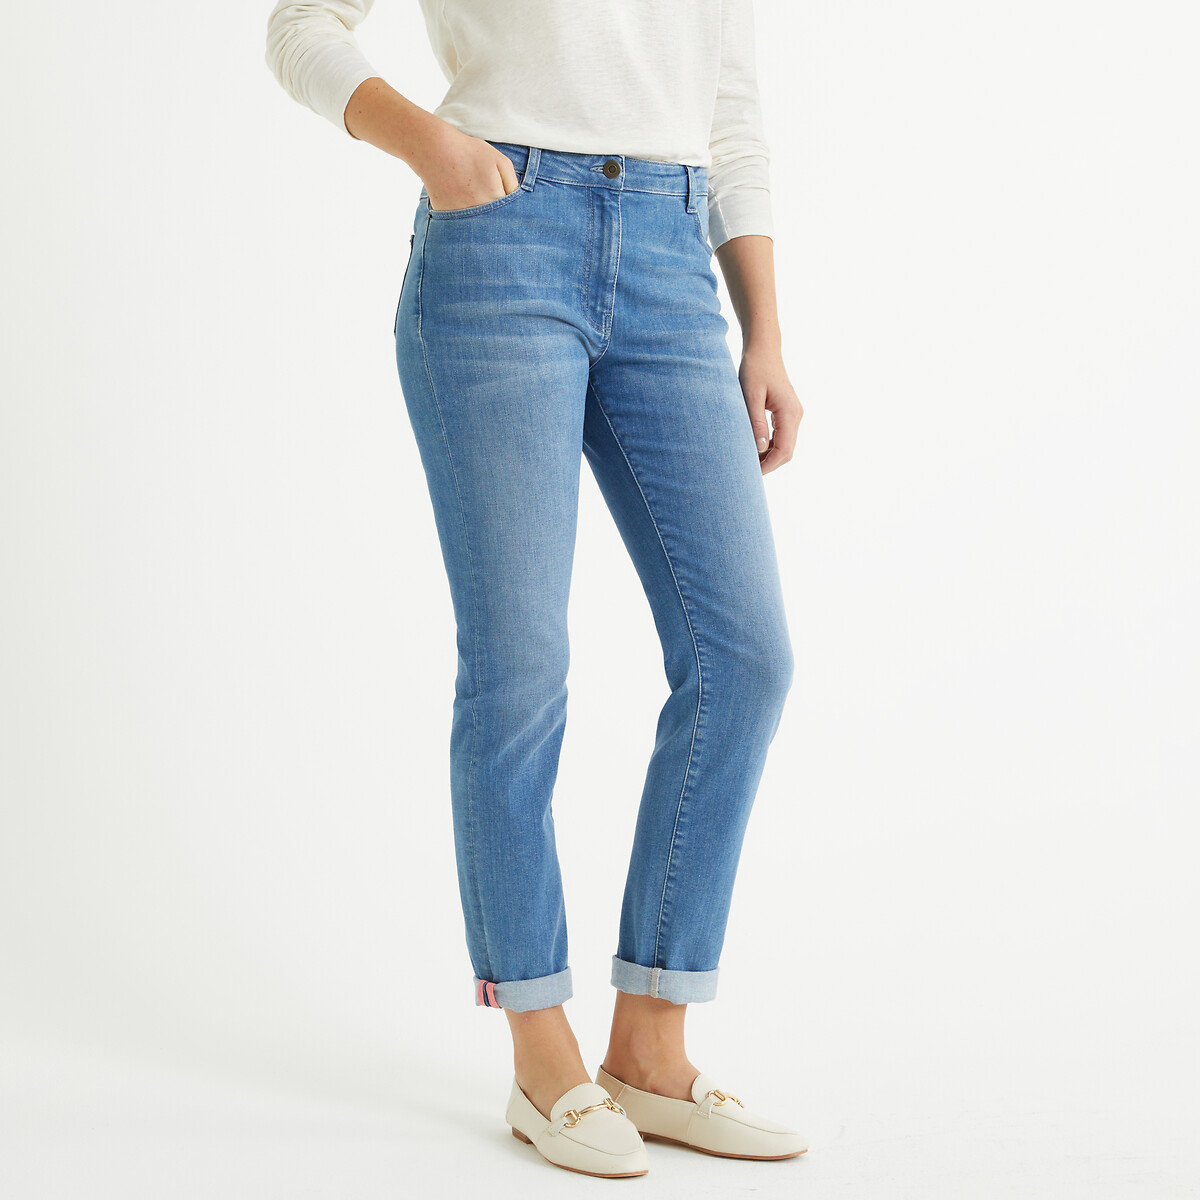 Image of Regular Straight Jeans in Organic Stretch Drenim, Length 30.5"